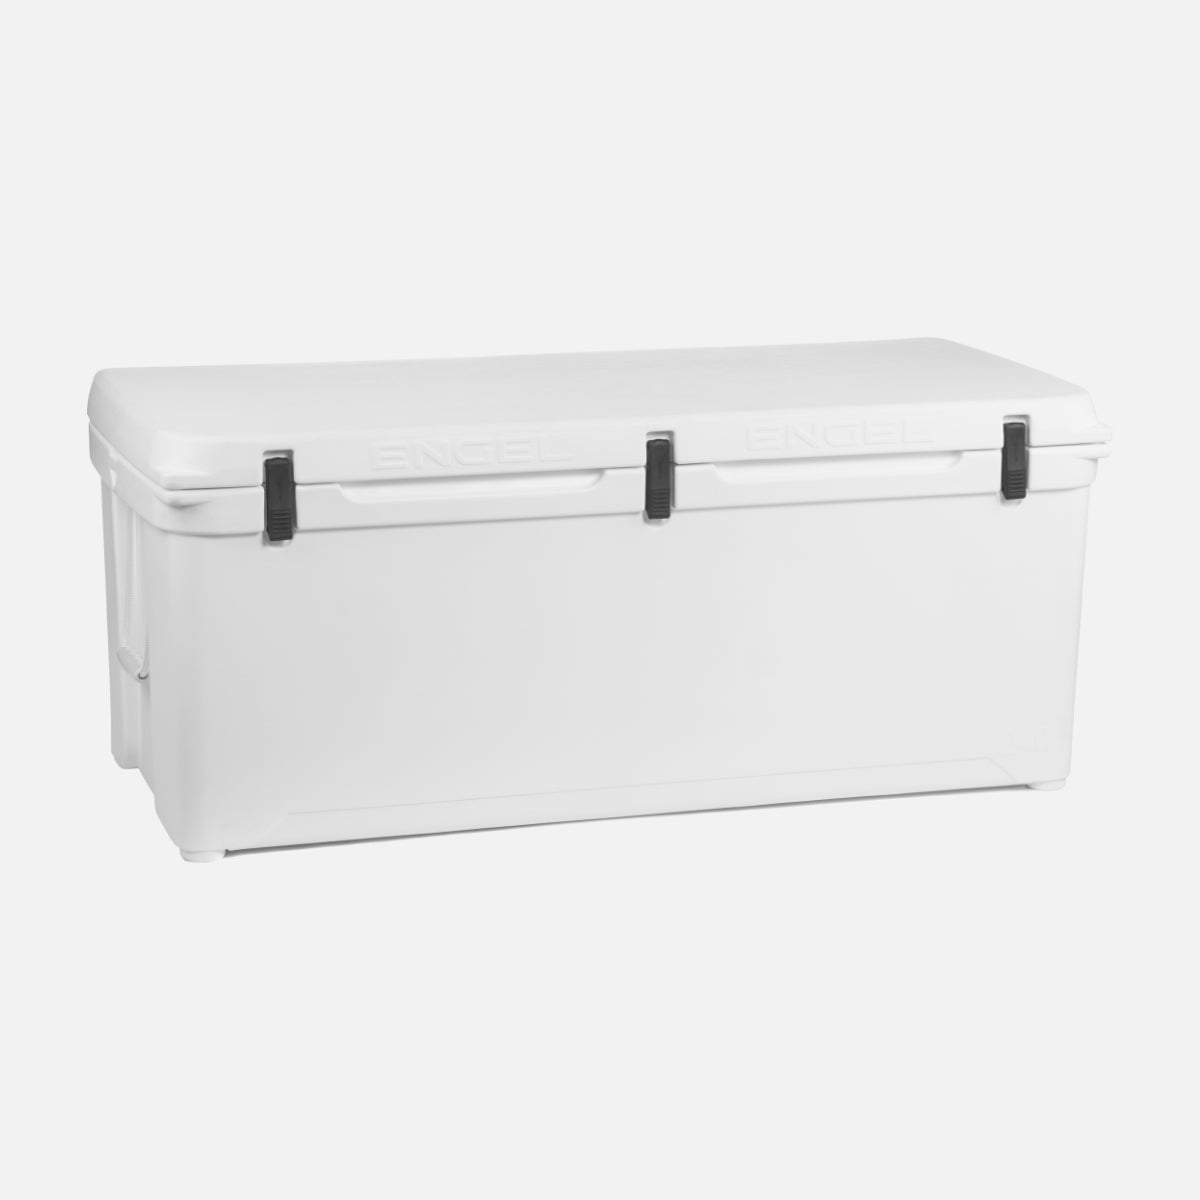 Engel Ice Box 228LT - WHITE Inc Basket